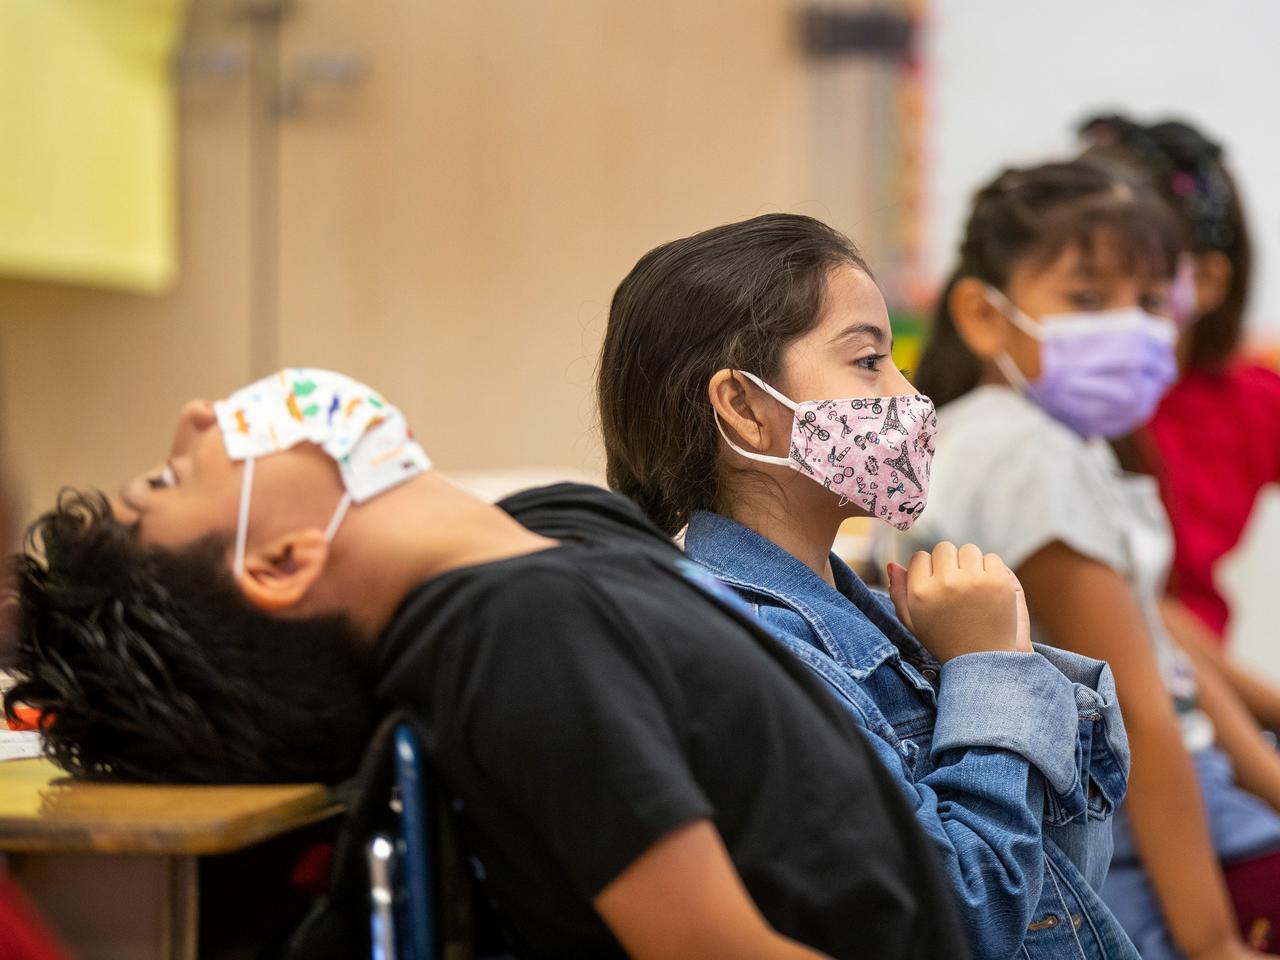 Kids in masks returning to school